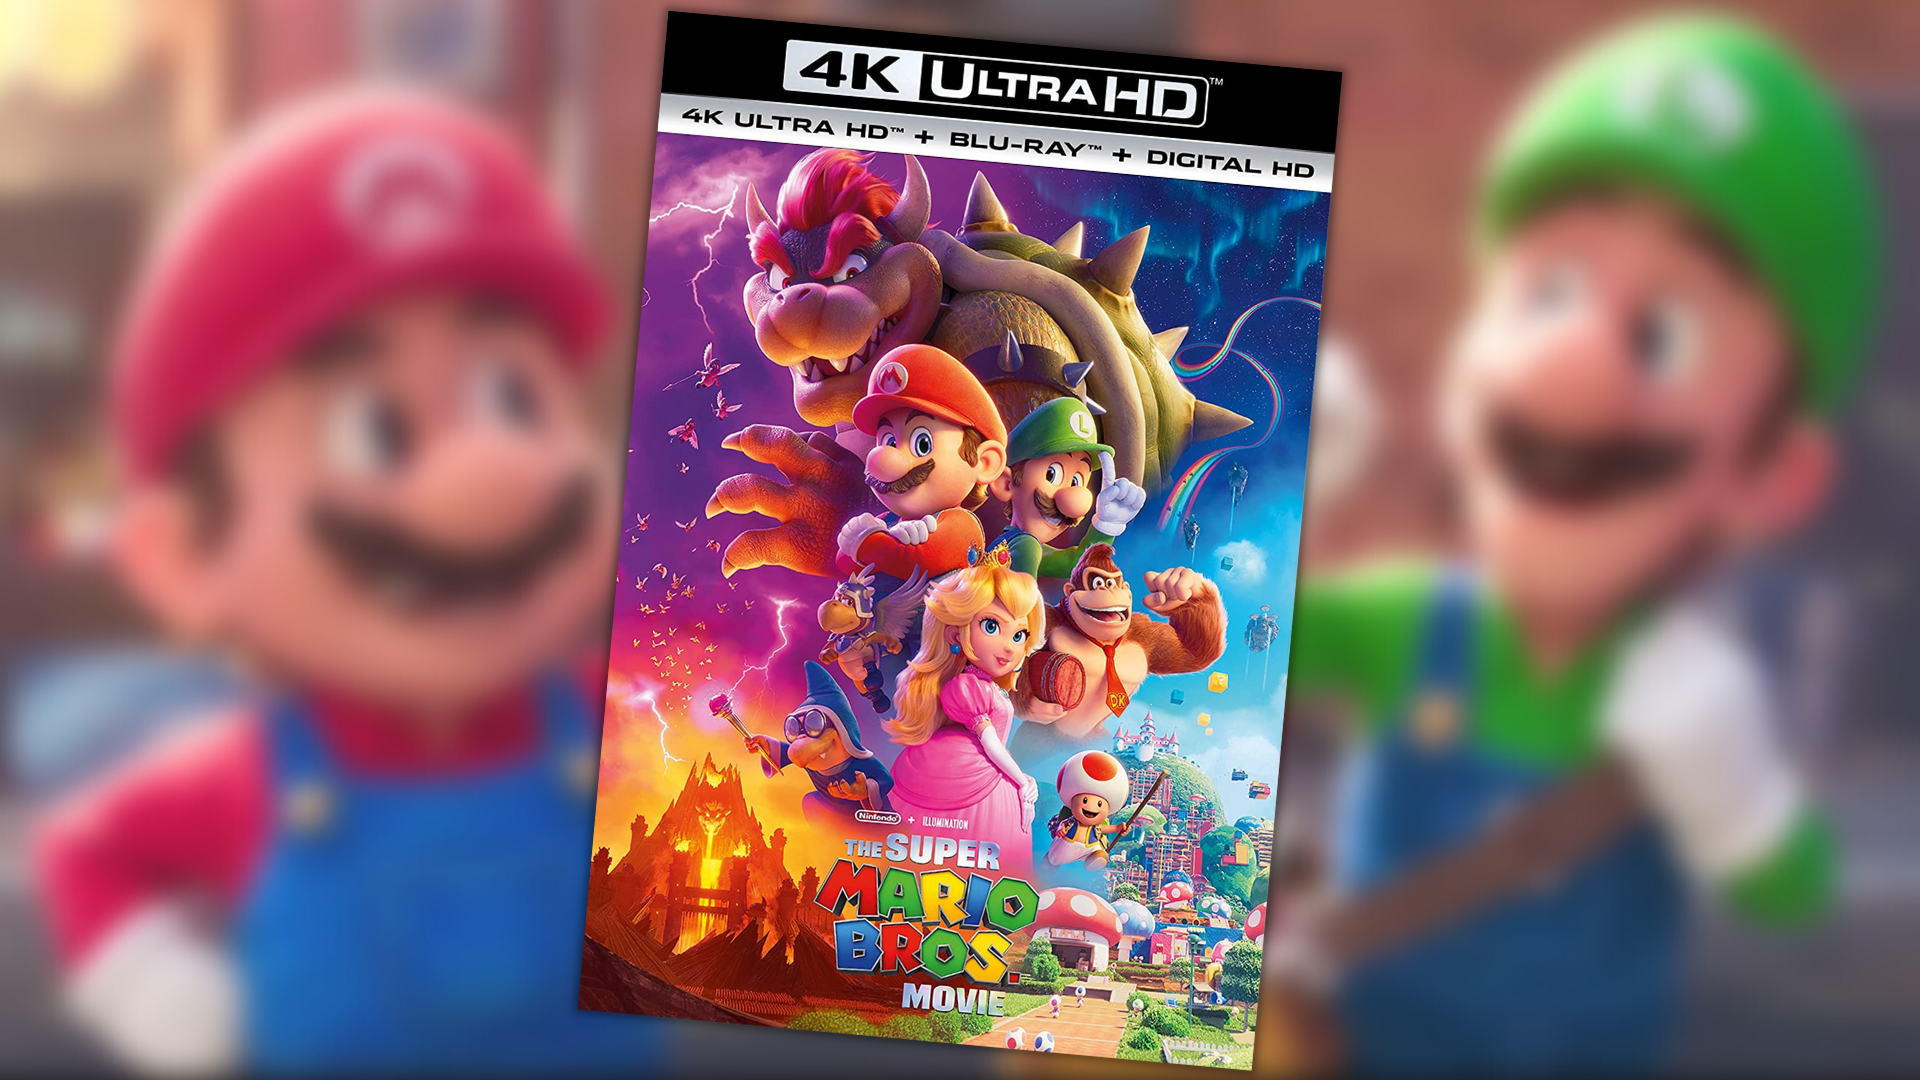 The Super Mario Bros. Movie – Power Up Edition (Blu-Ray + DVD + Digital  Code)